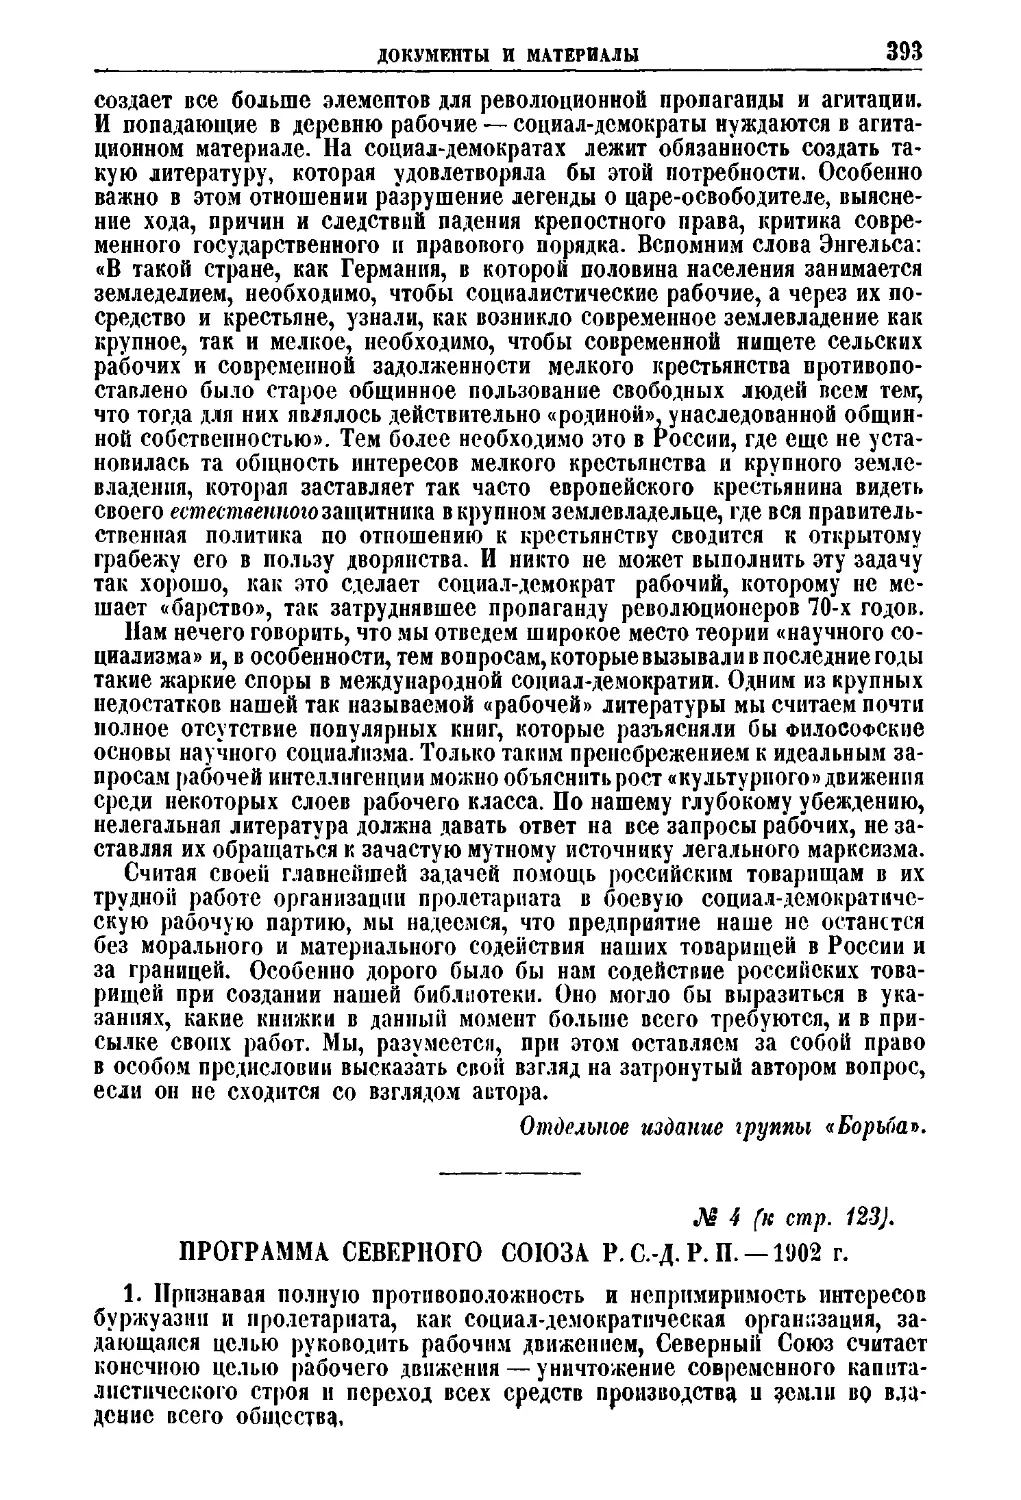 № 4. Программа Северного Союза Р. С.-Д. Р. П. — 1902 г.